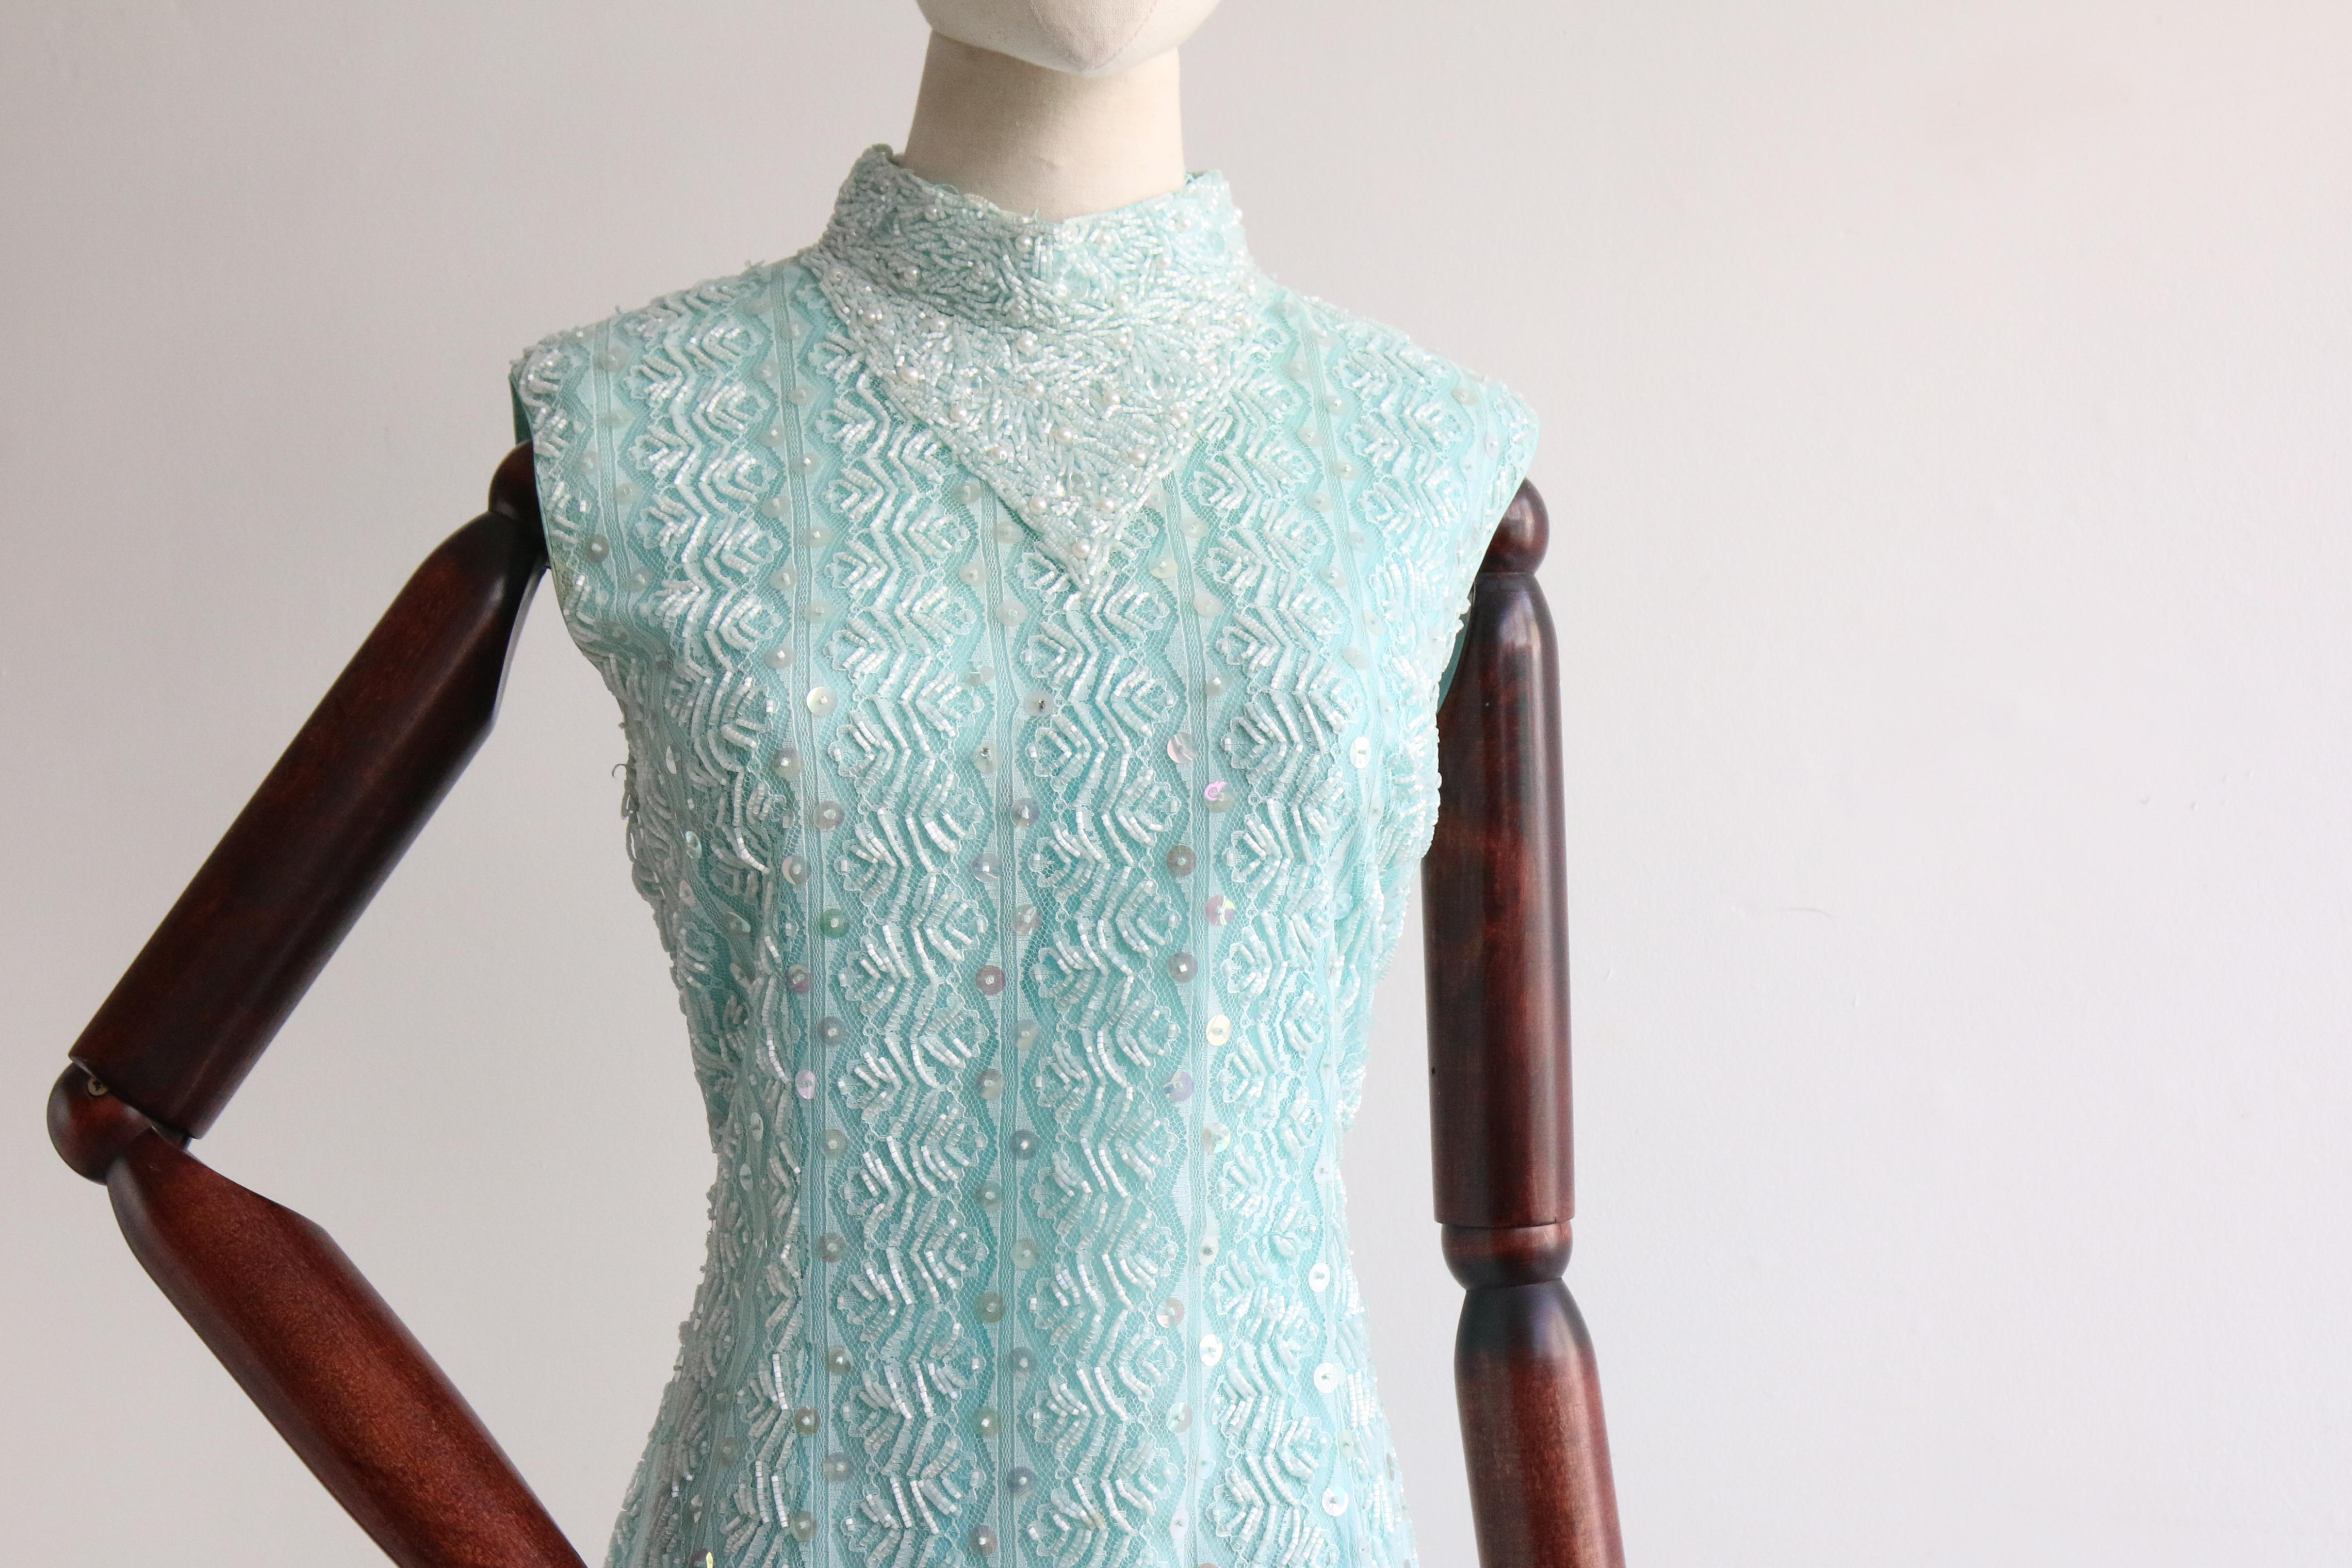 Vintage 1960's Aqua Beaded Lace Dress UK 10-12 US 6-8 For Sale 1